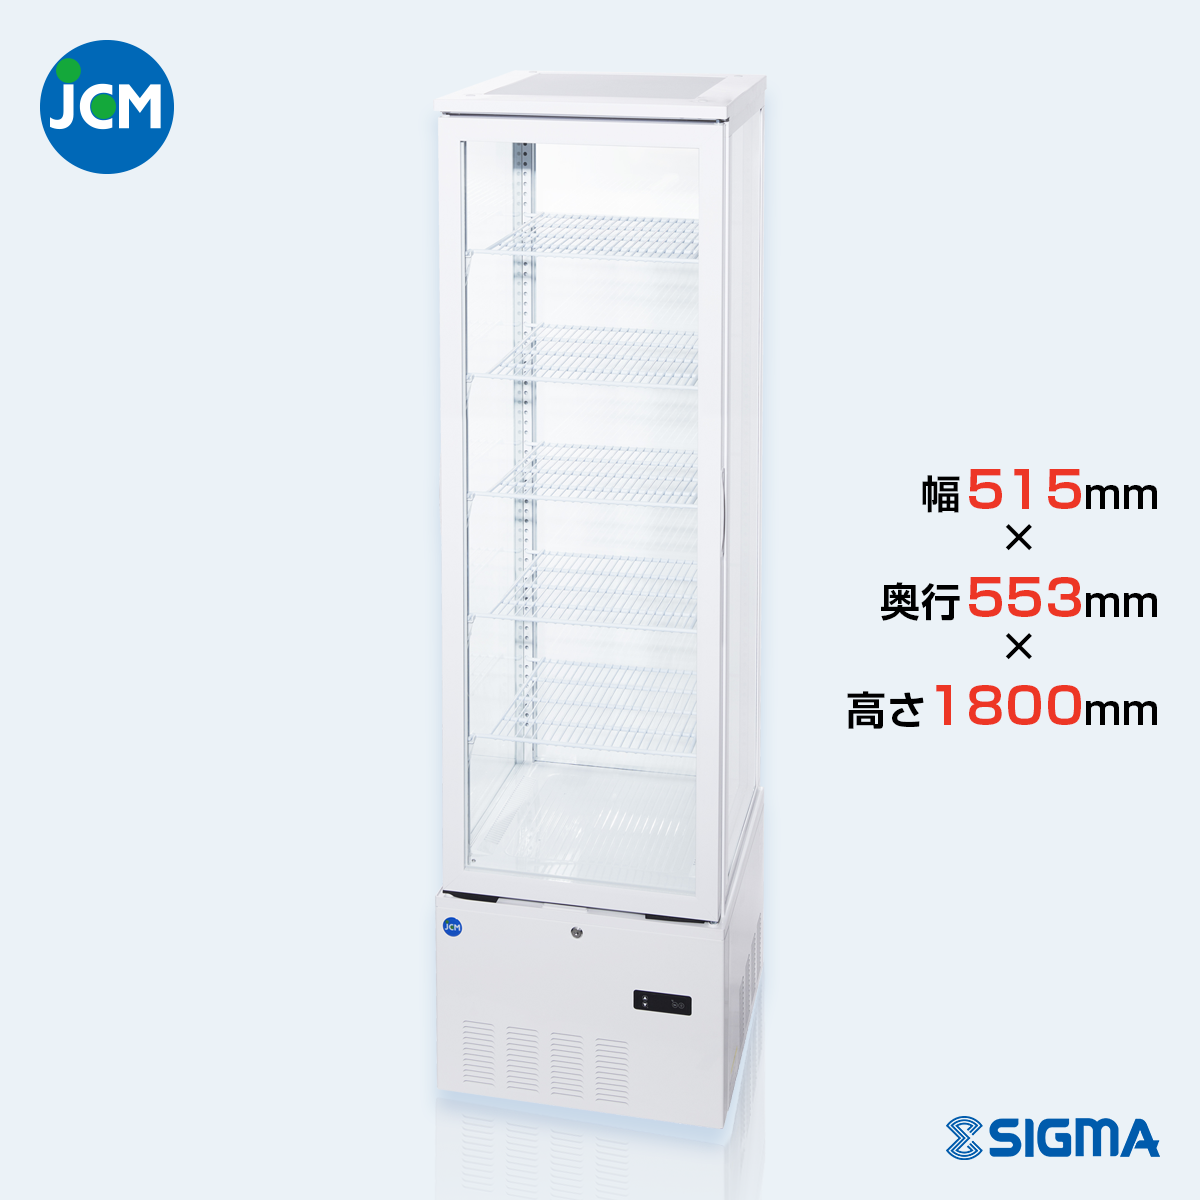 JCMタテ型冷凍ショーケース（観音扉型）JCMCS-290 - 1